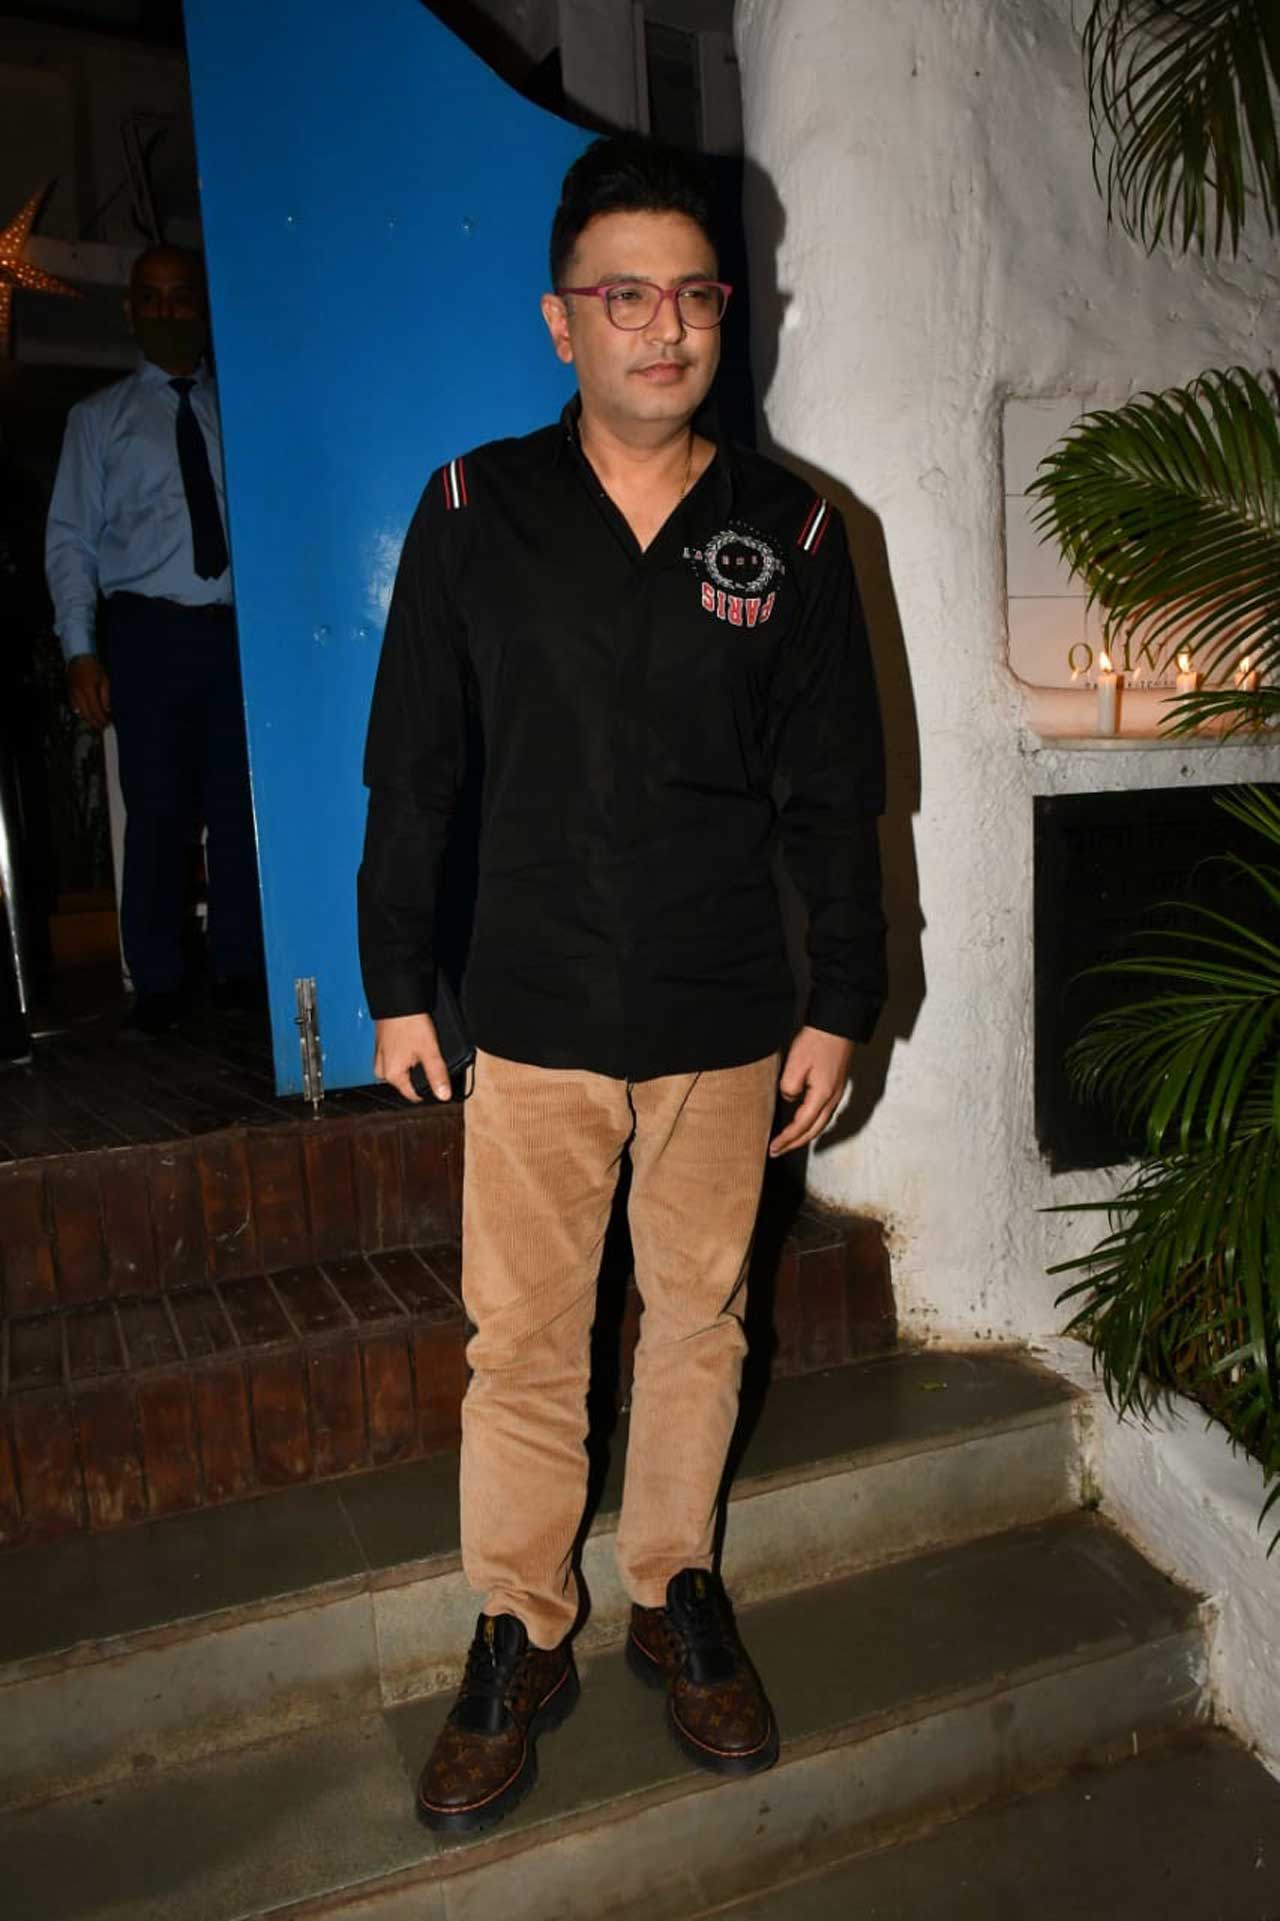 Producer Bhushan Kumar also joined the celebration.